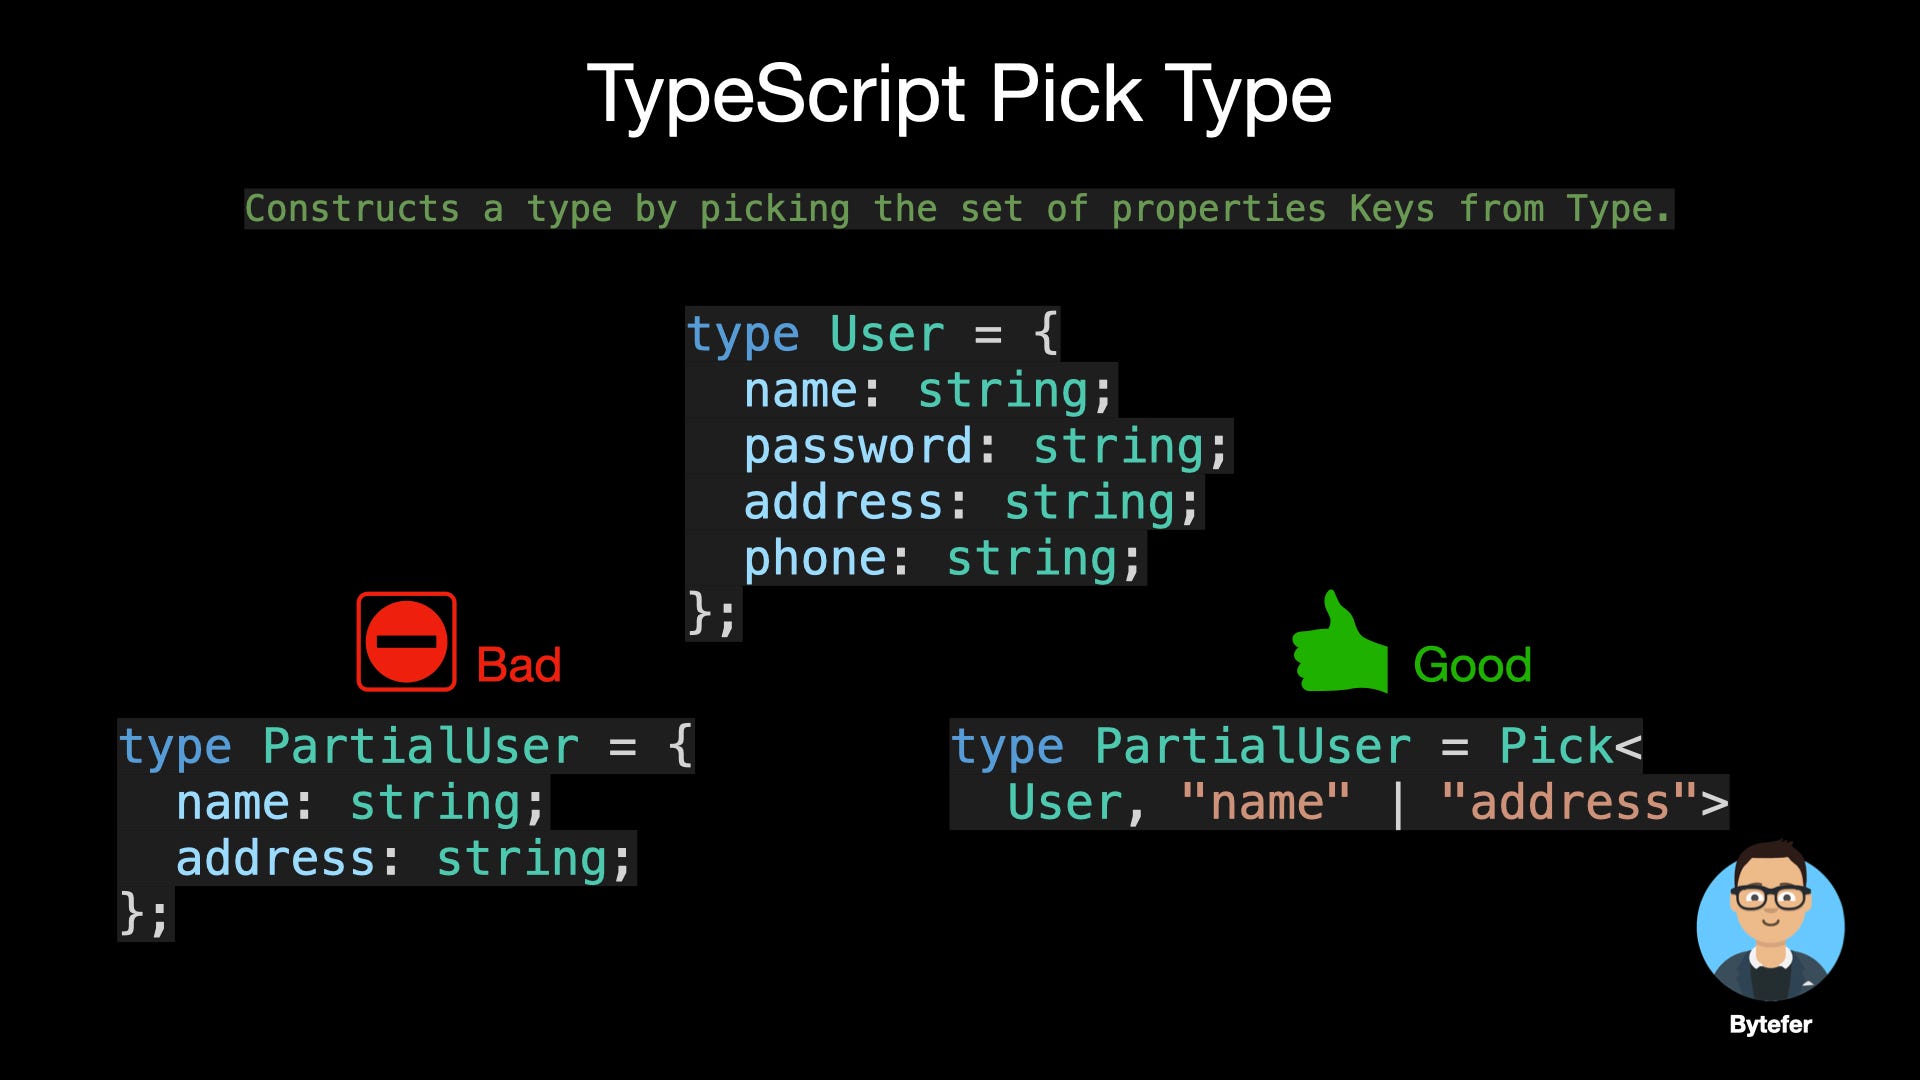 TypeScript Interface Merging And Extending Modules - PQINA